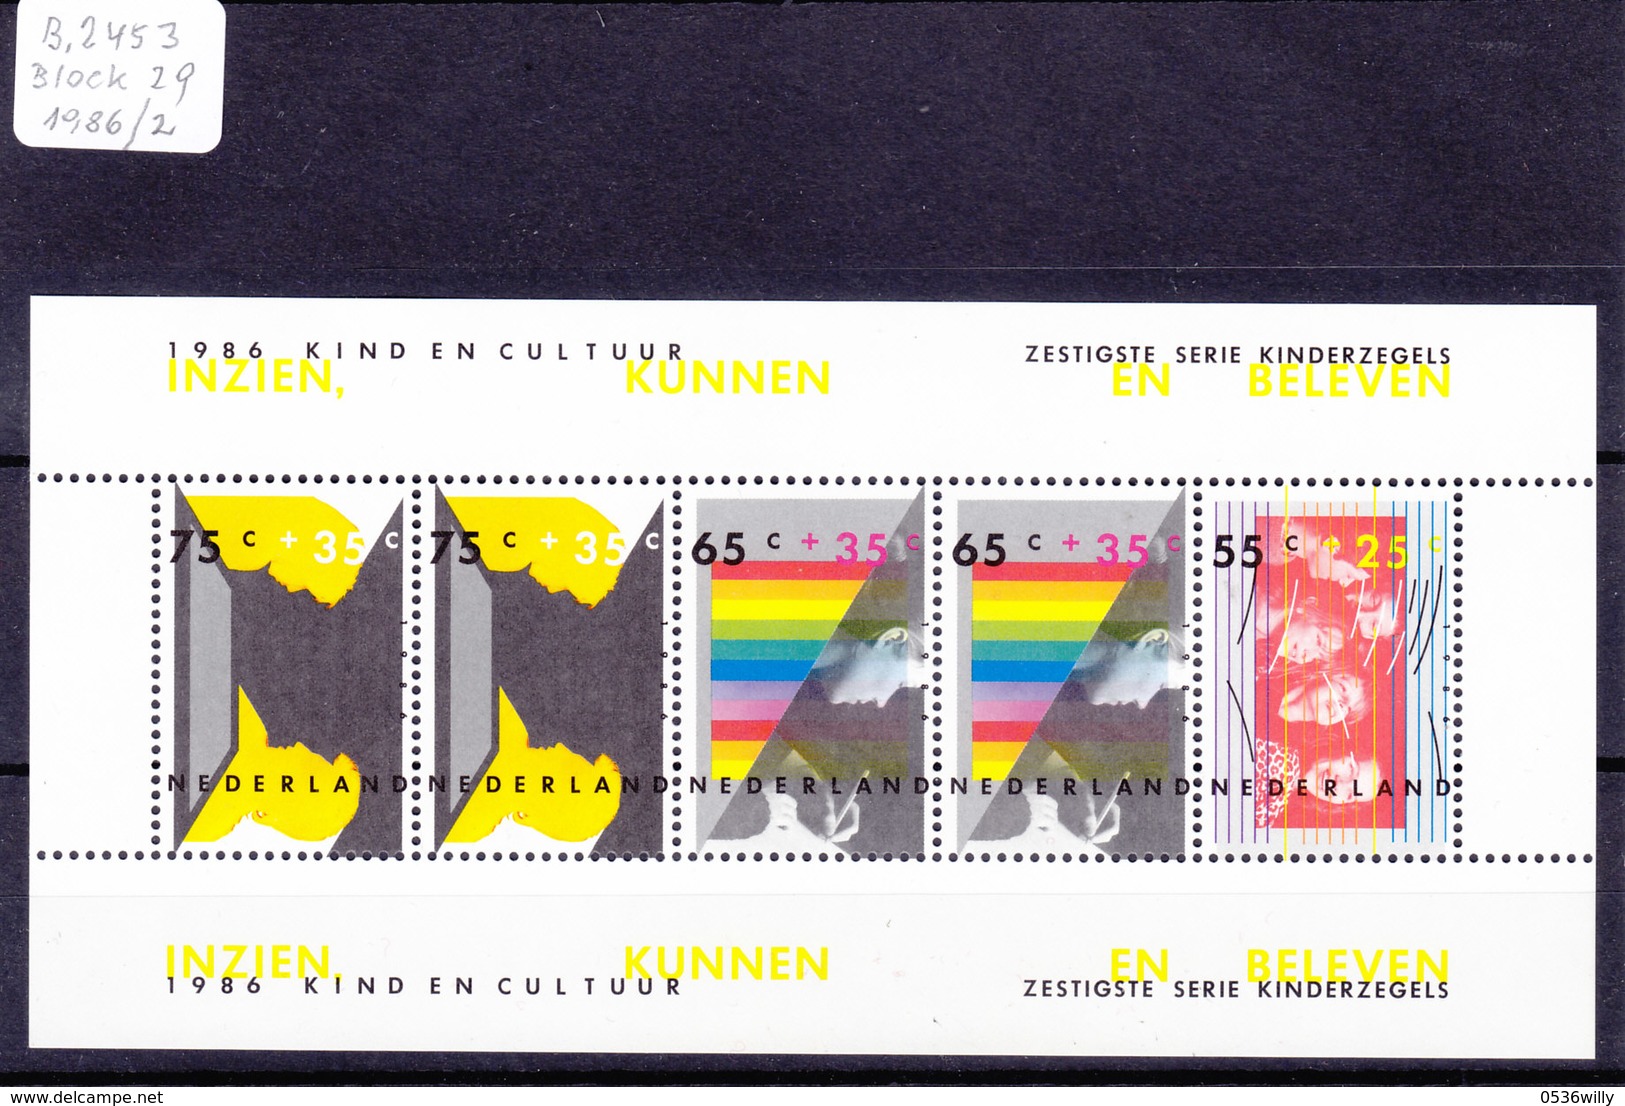 NL-Niederlande Ausgaben 1986 Komplett (B.2453) - Années Complètes